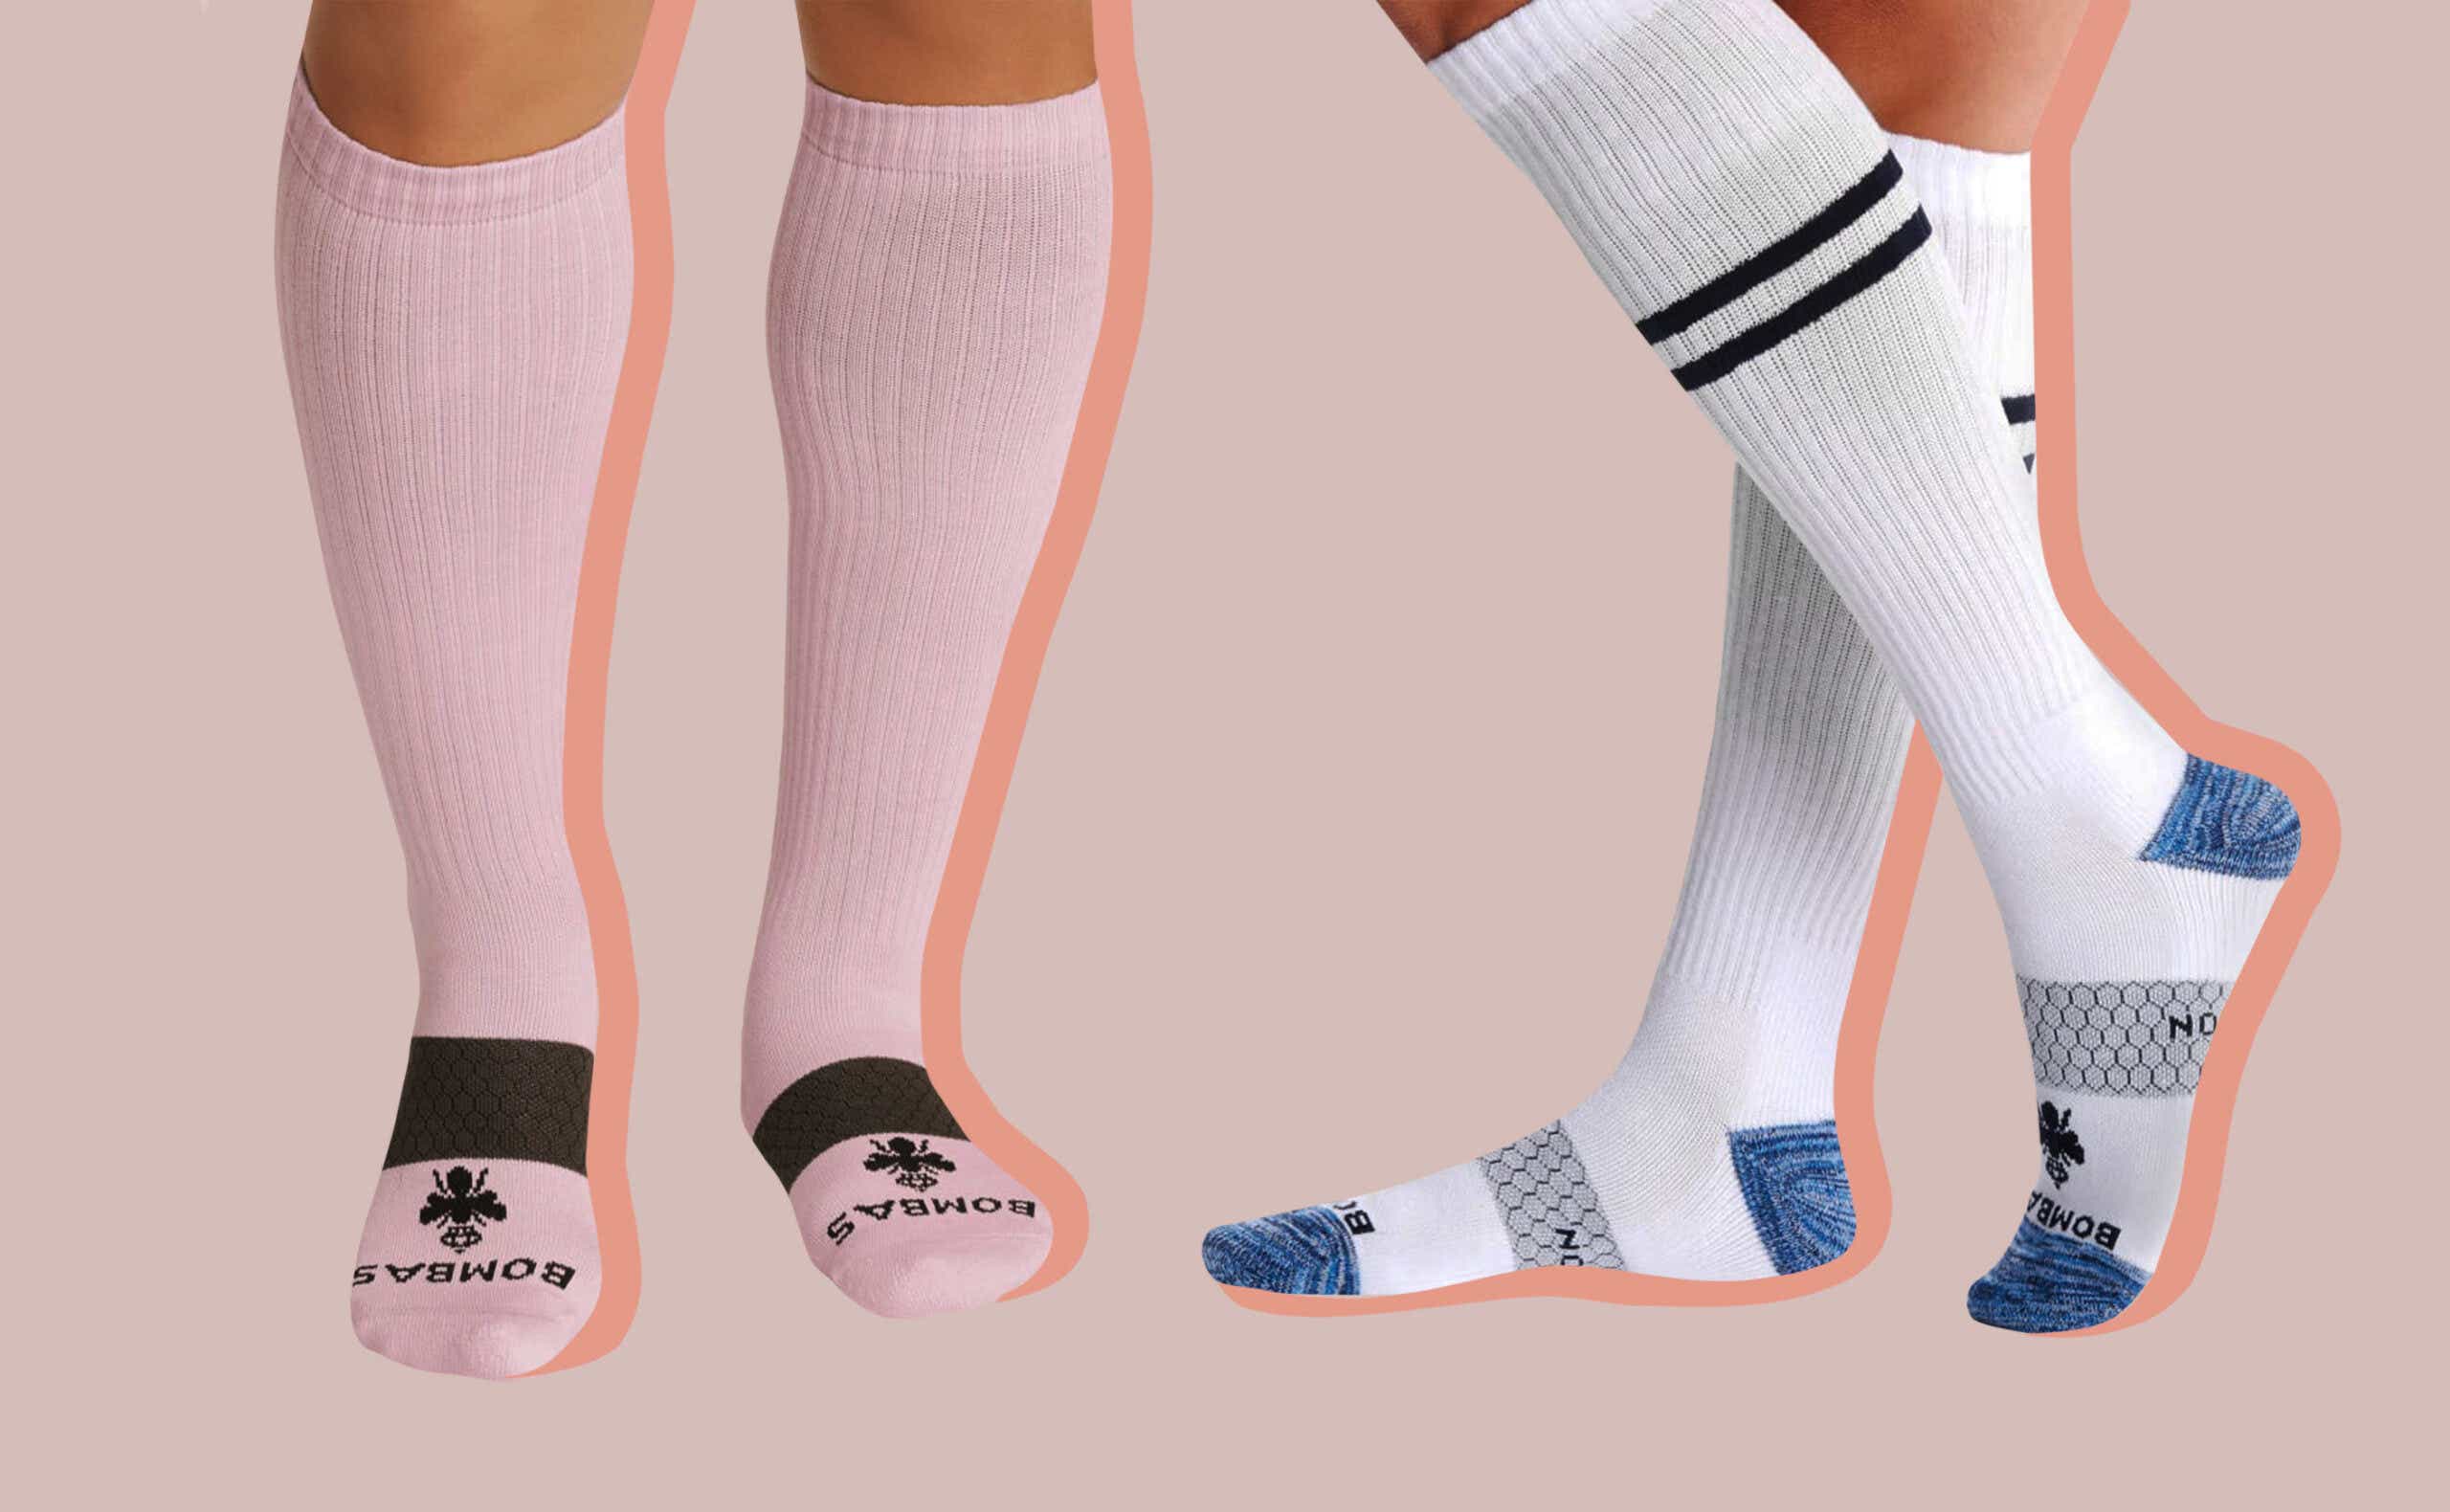 Bombas Compression Socks Review - Best Compression Sock